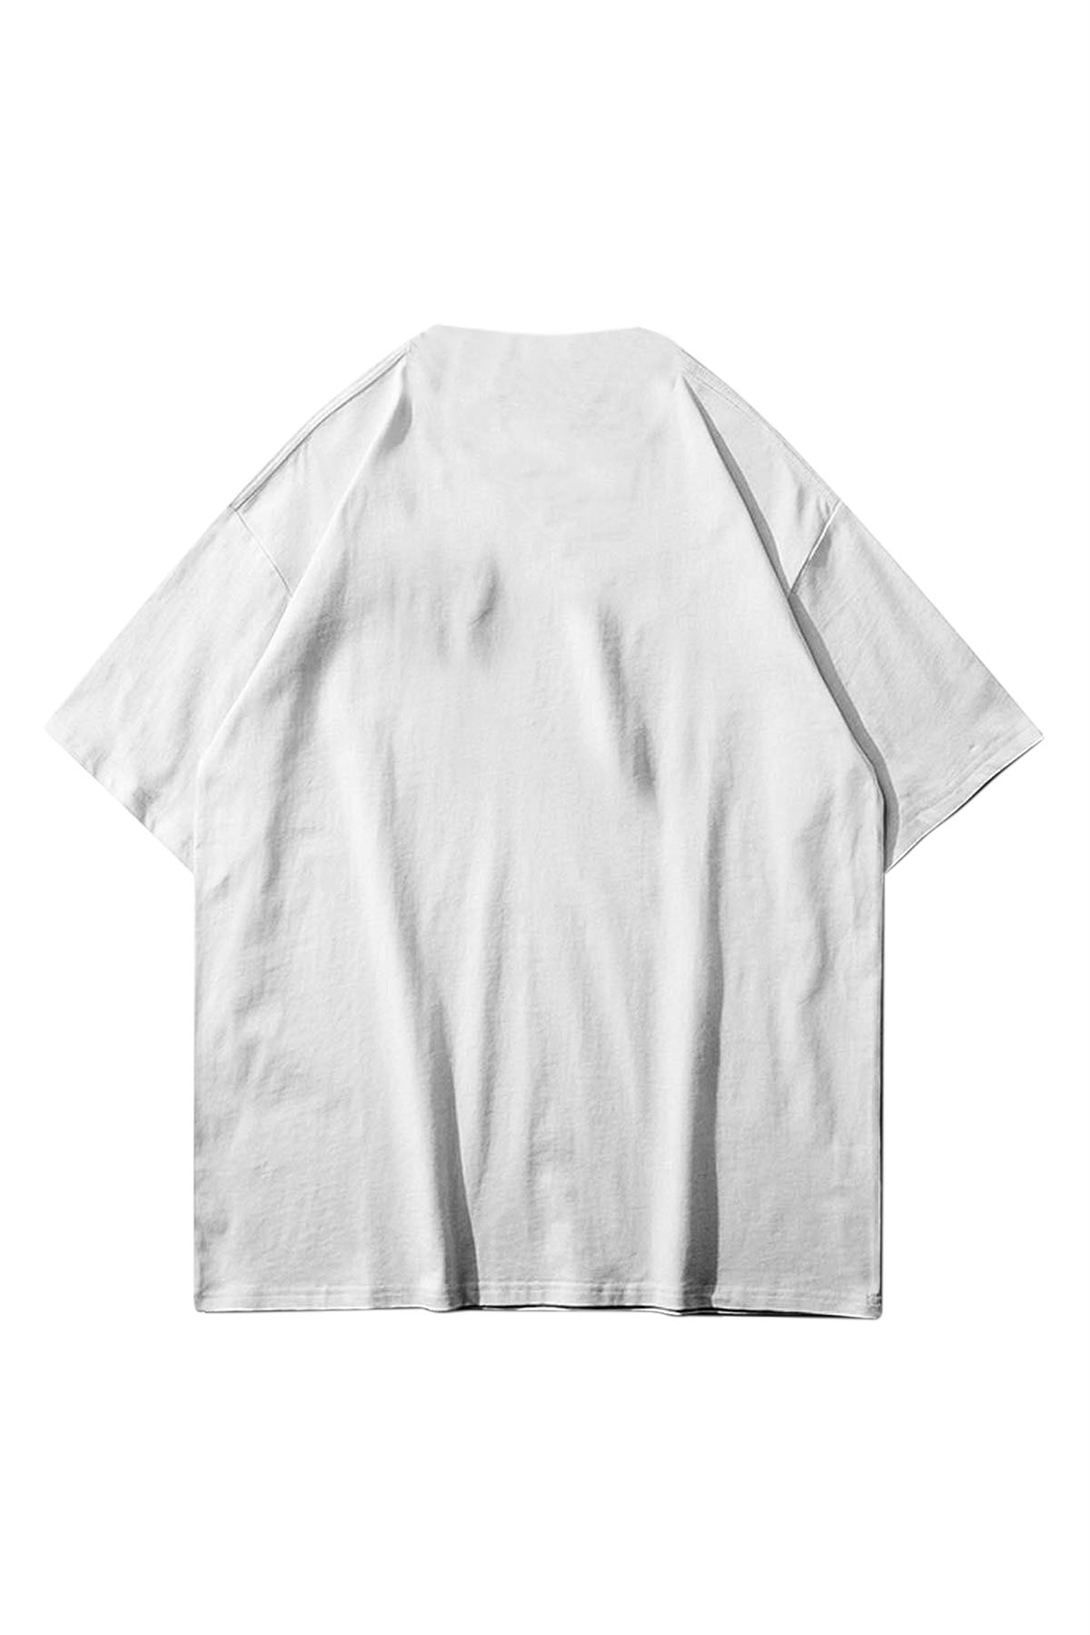 Trendiz Unisex Befearless Cat Beyaz Tshirt